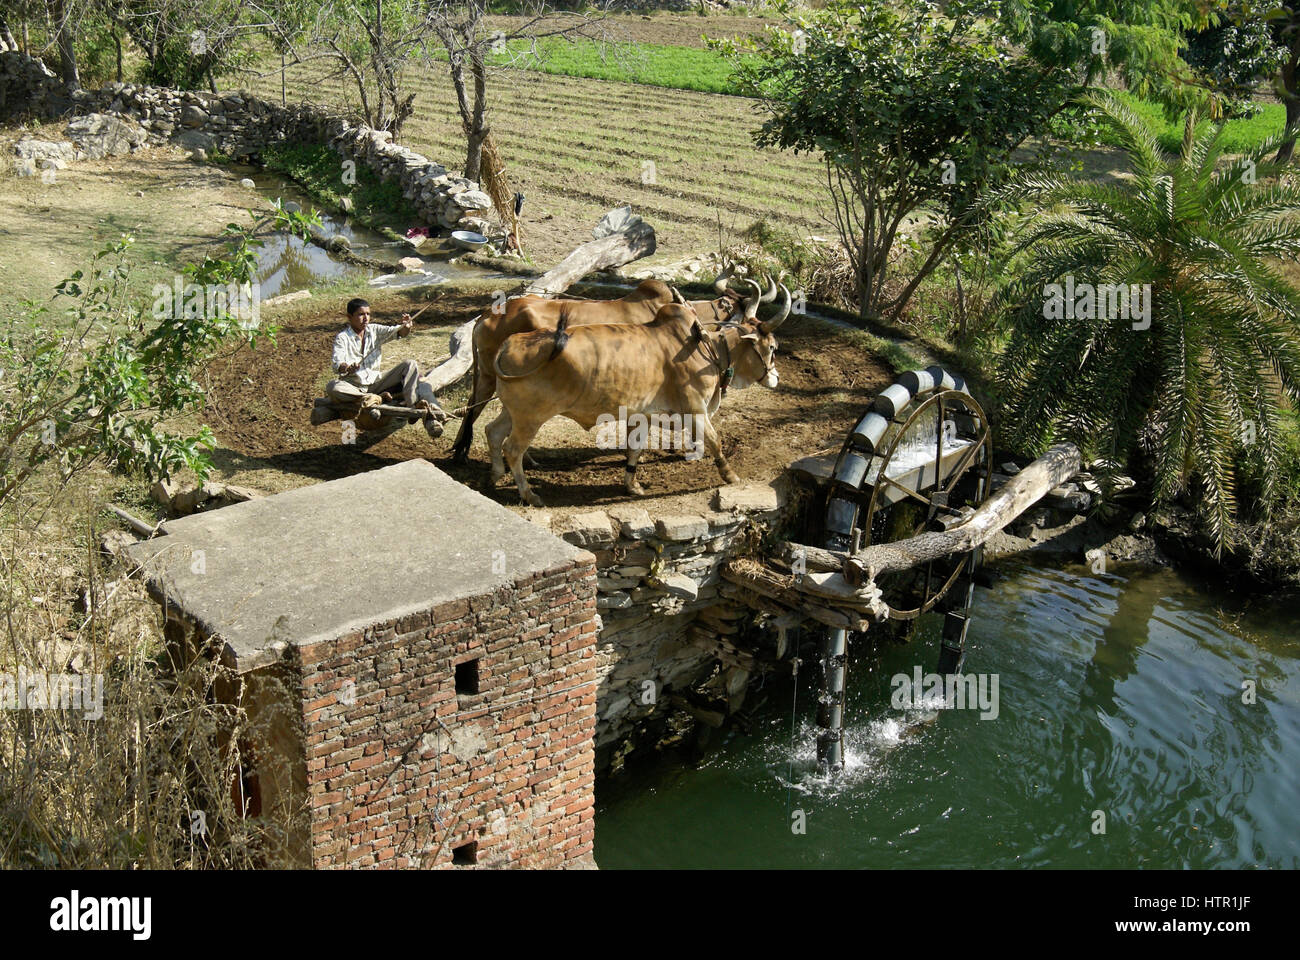 Bullocks turning a Persian water wheel to irrigate crops, Rajasthan, India Stock Photo